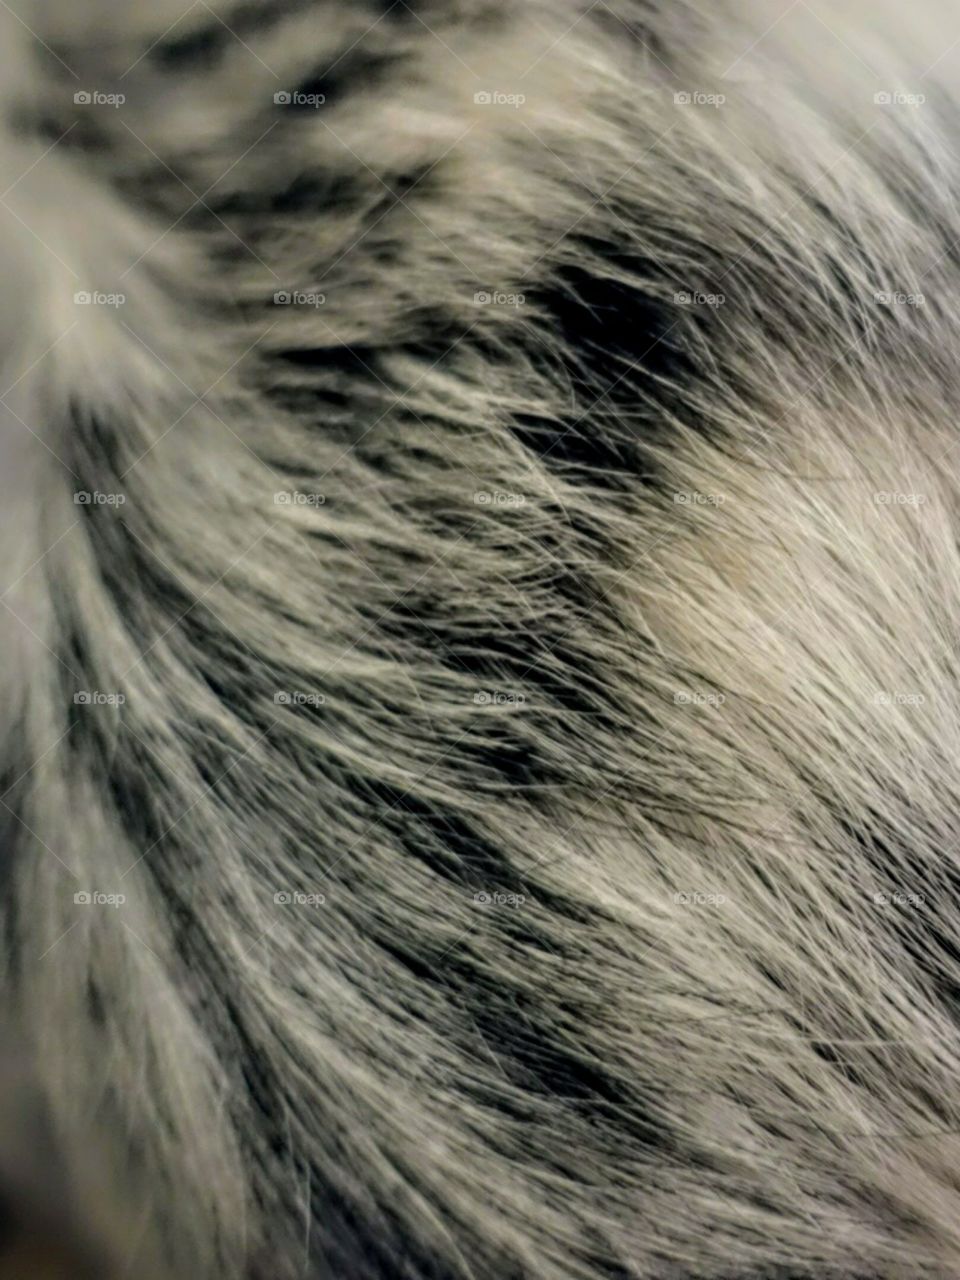 Dog fur!